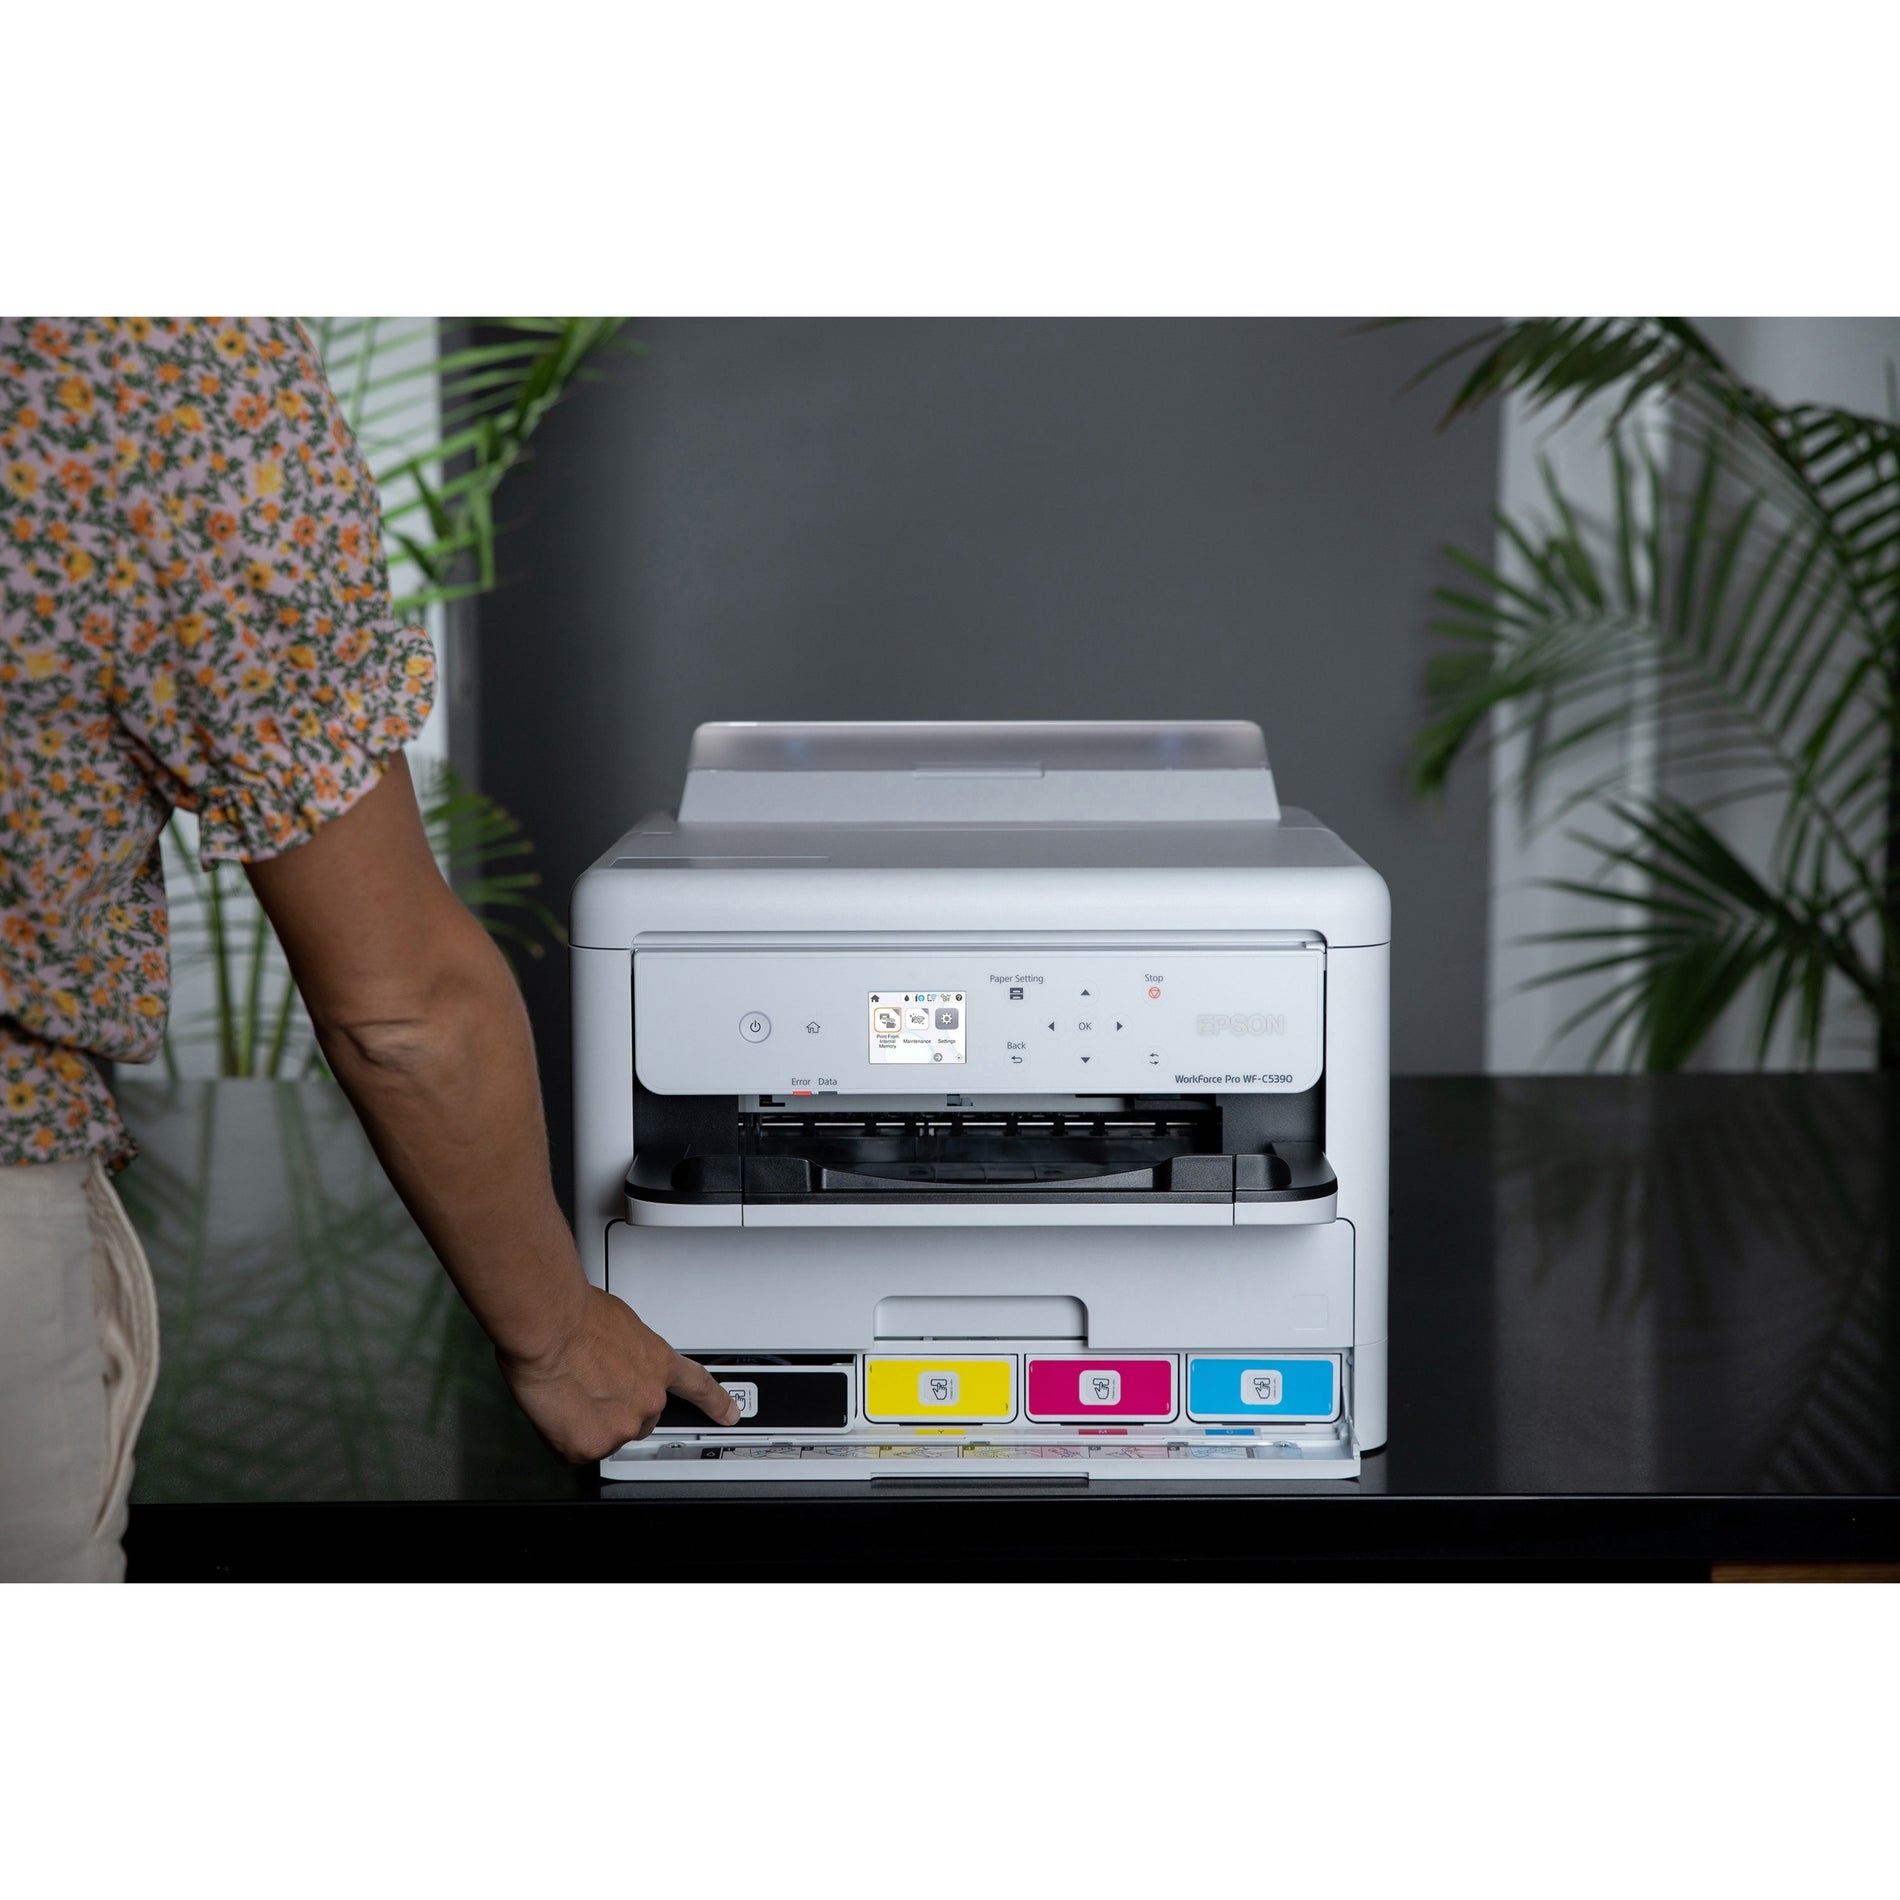 Epson C11CK25201 WorkForce Pro WF-C5390 Inkjet Printer, Wireless, Color, Automatic Duplex Printing